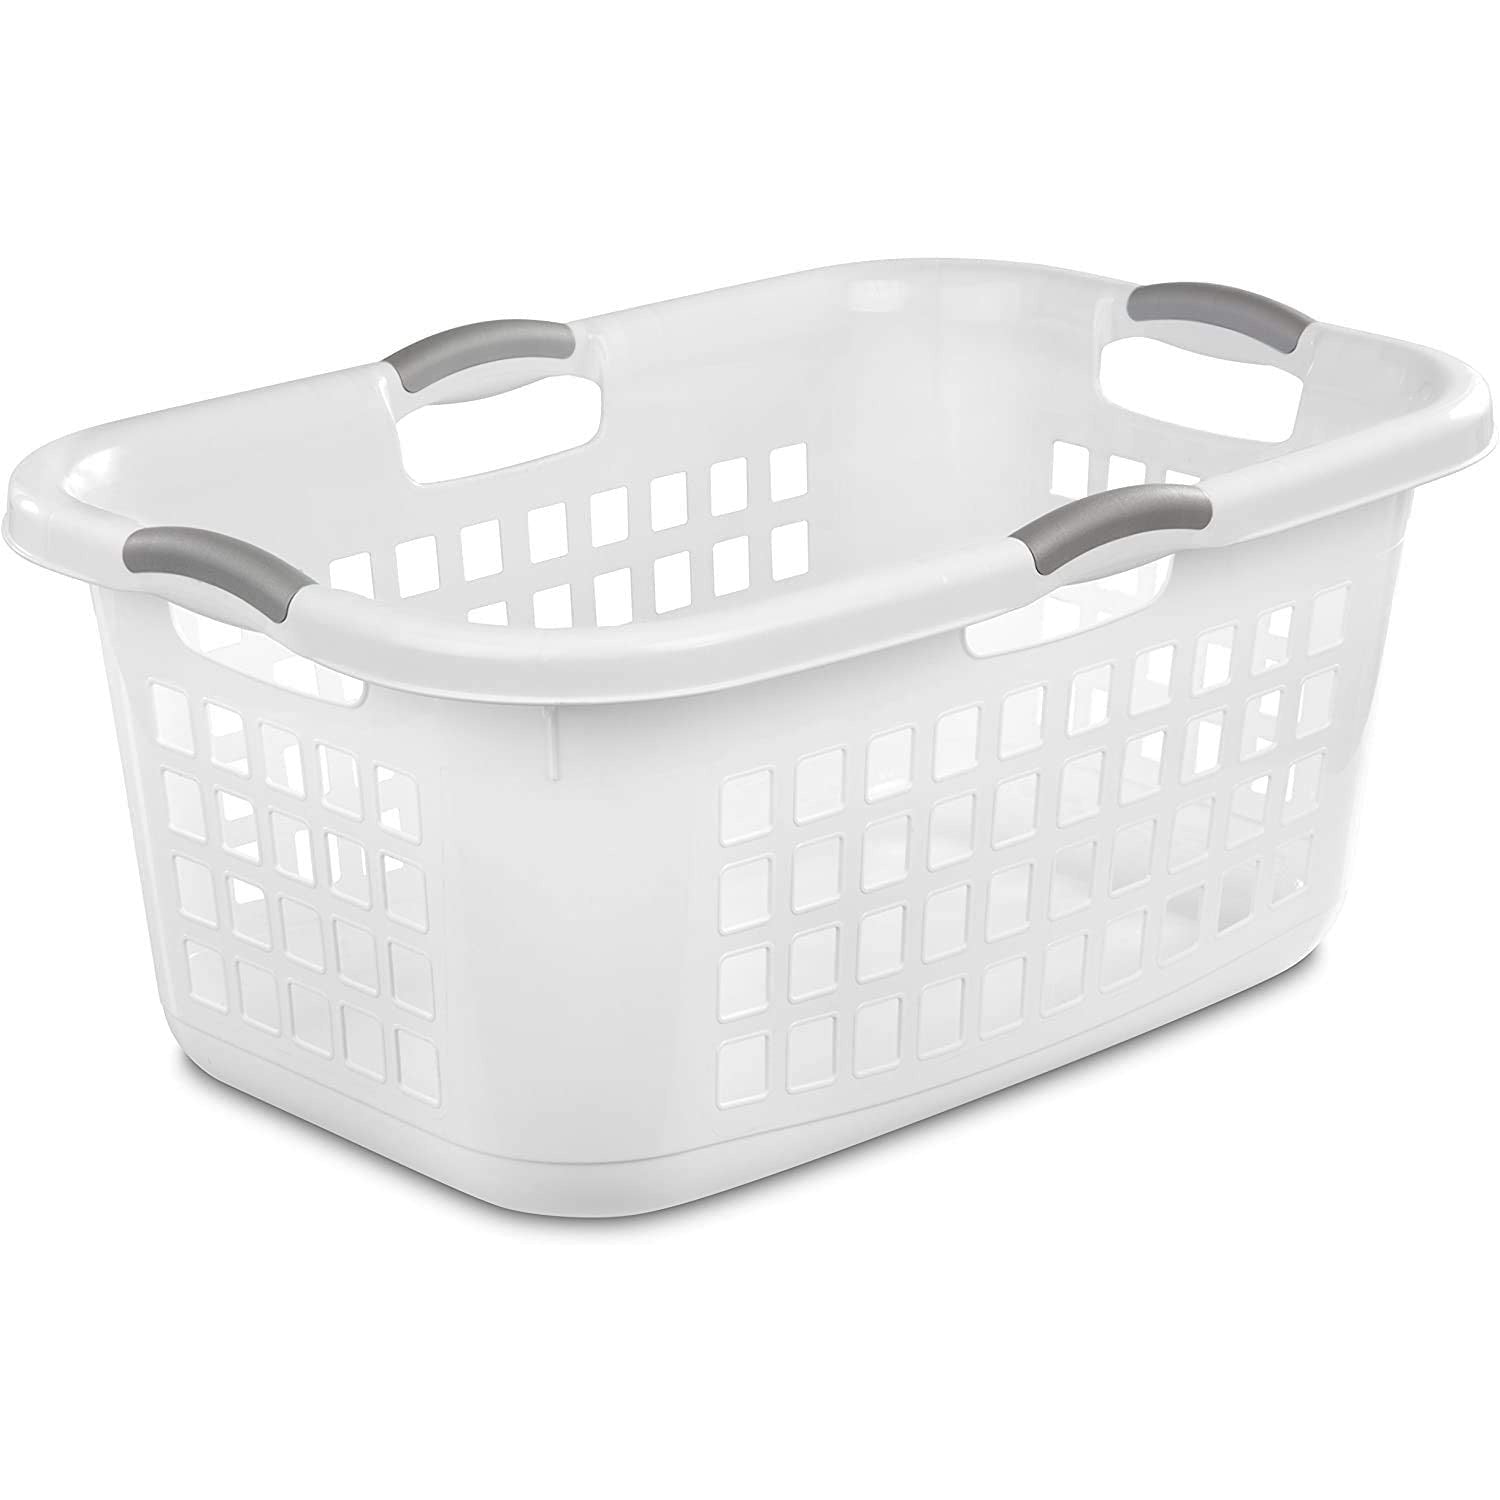 3 Tier Laundry Basket Holder (2 Bushel)